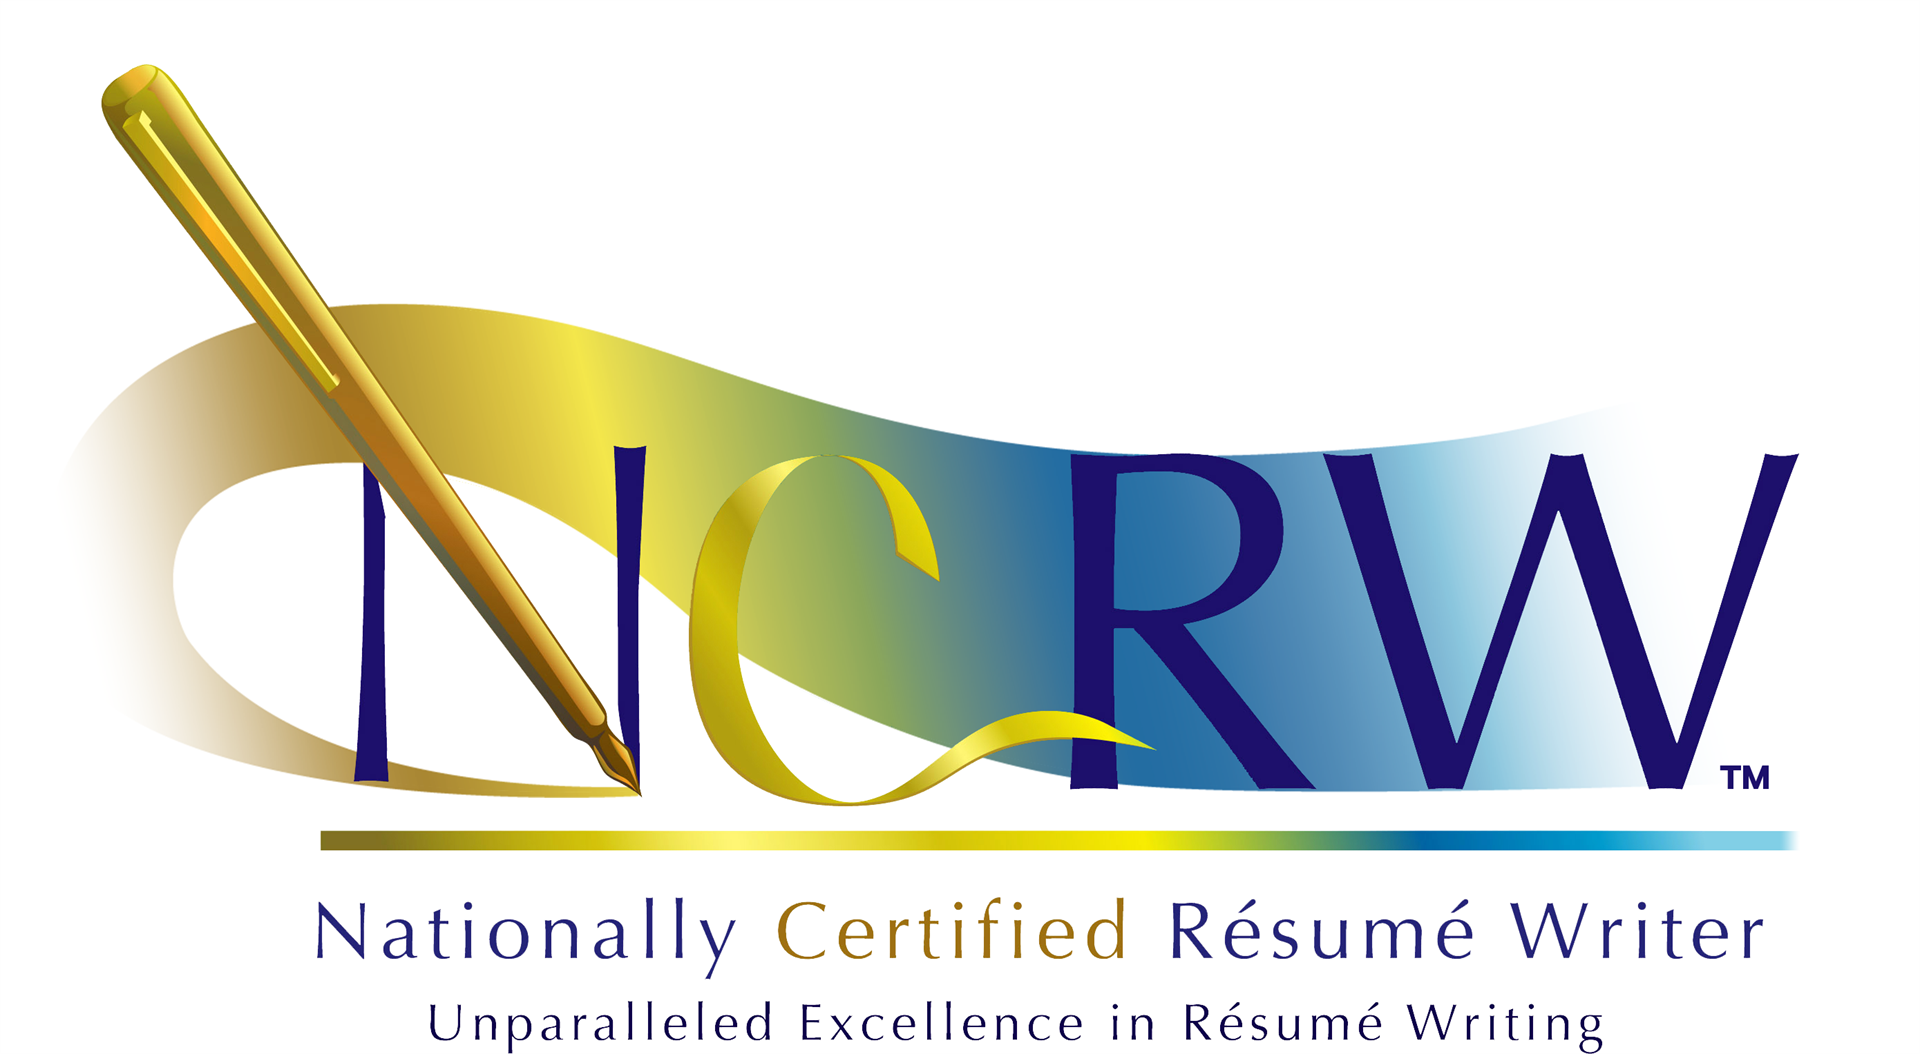 NCRW - Nationally Certified Resume Writer Logo